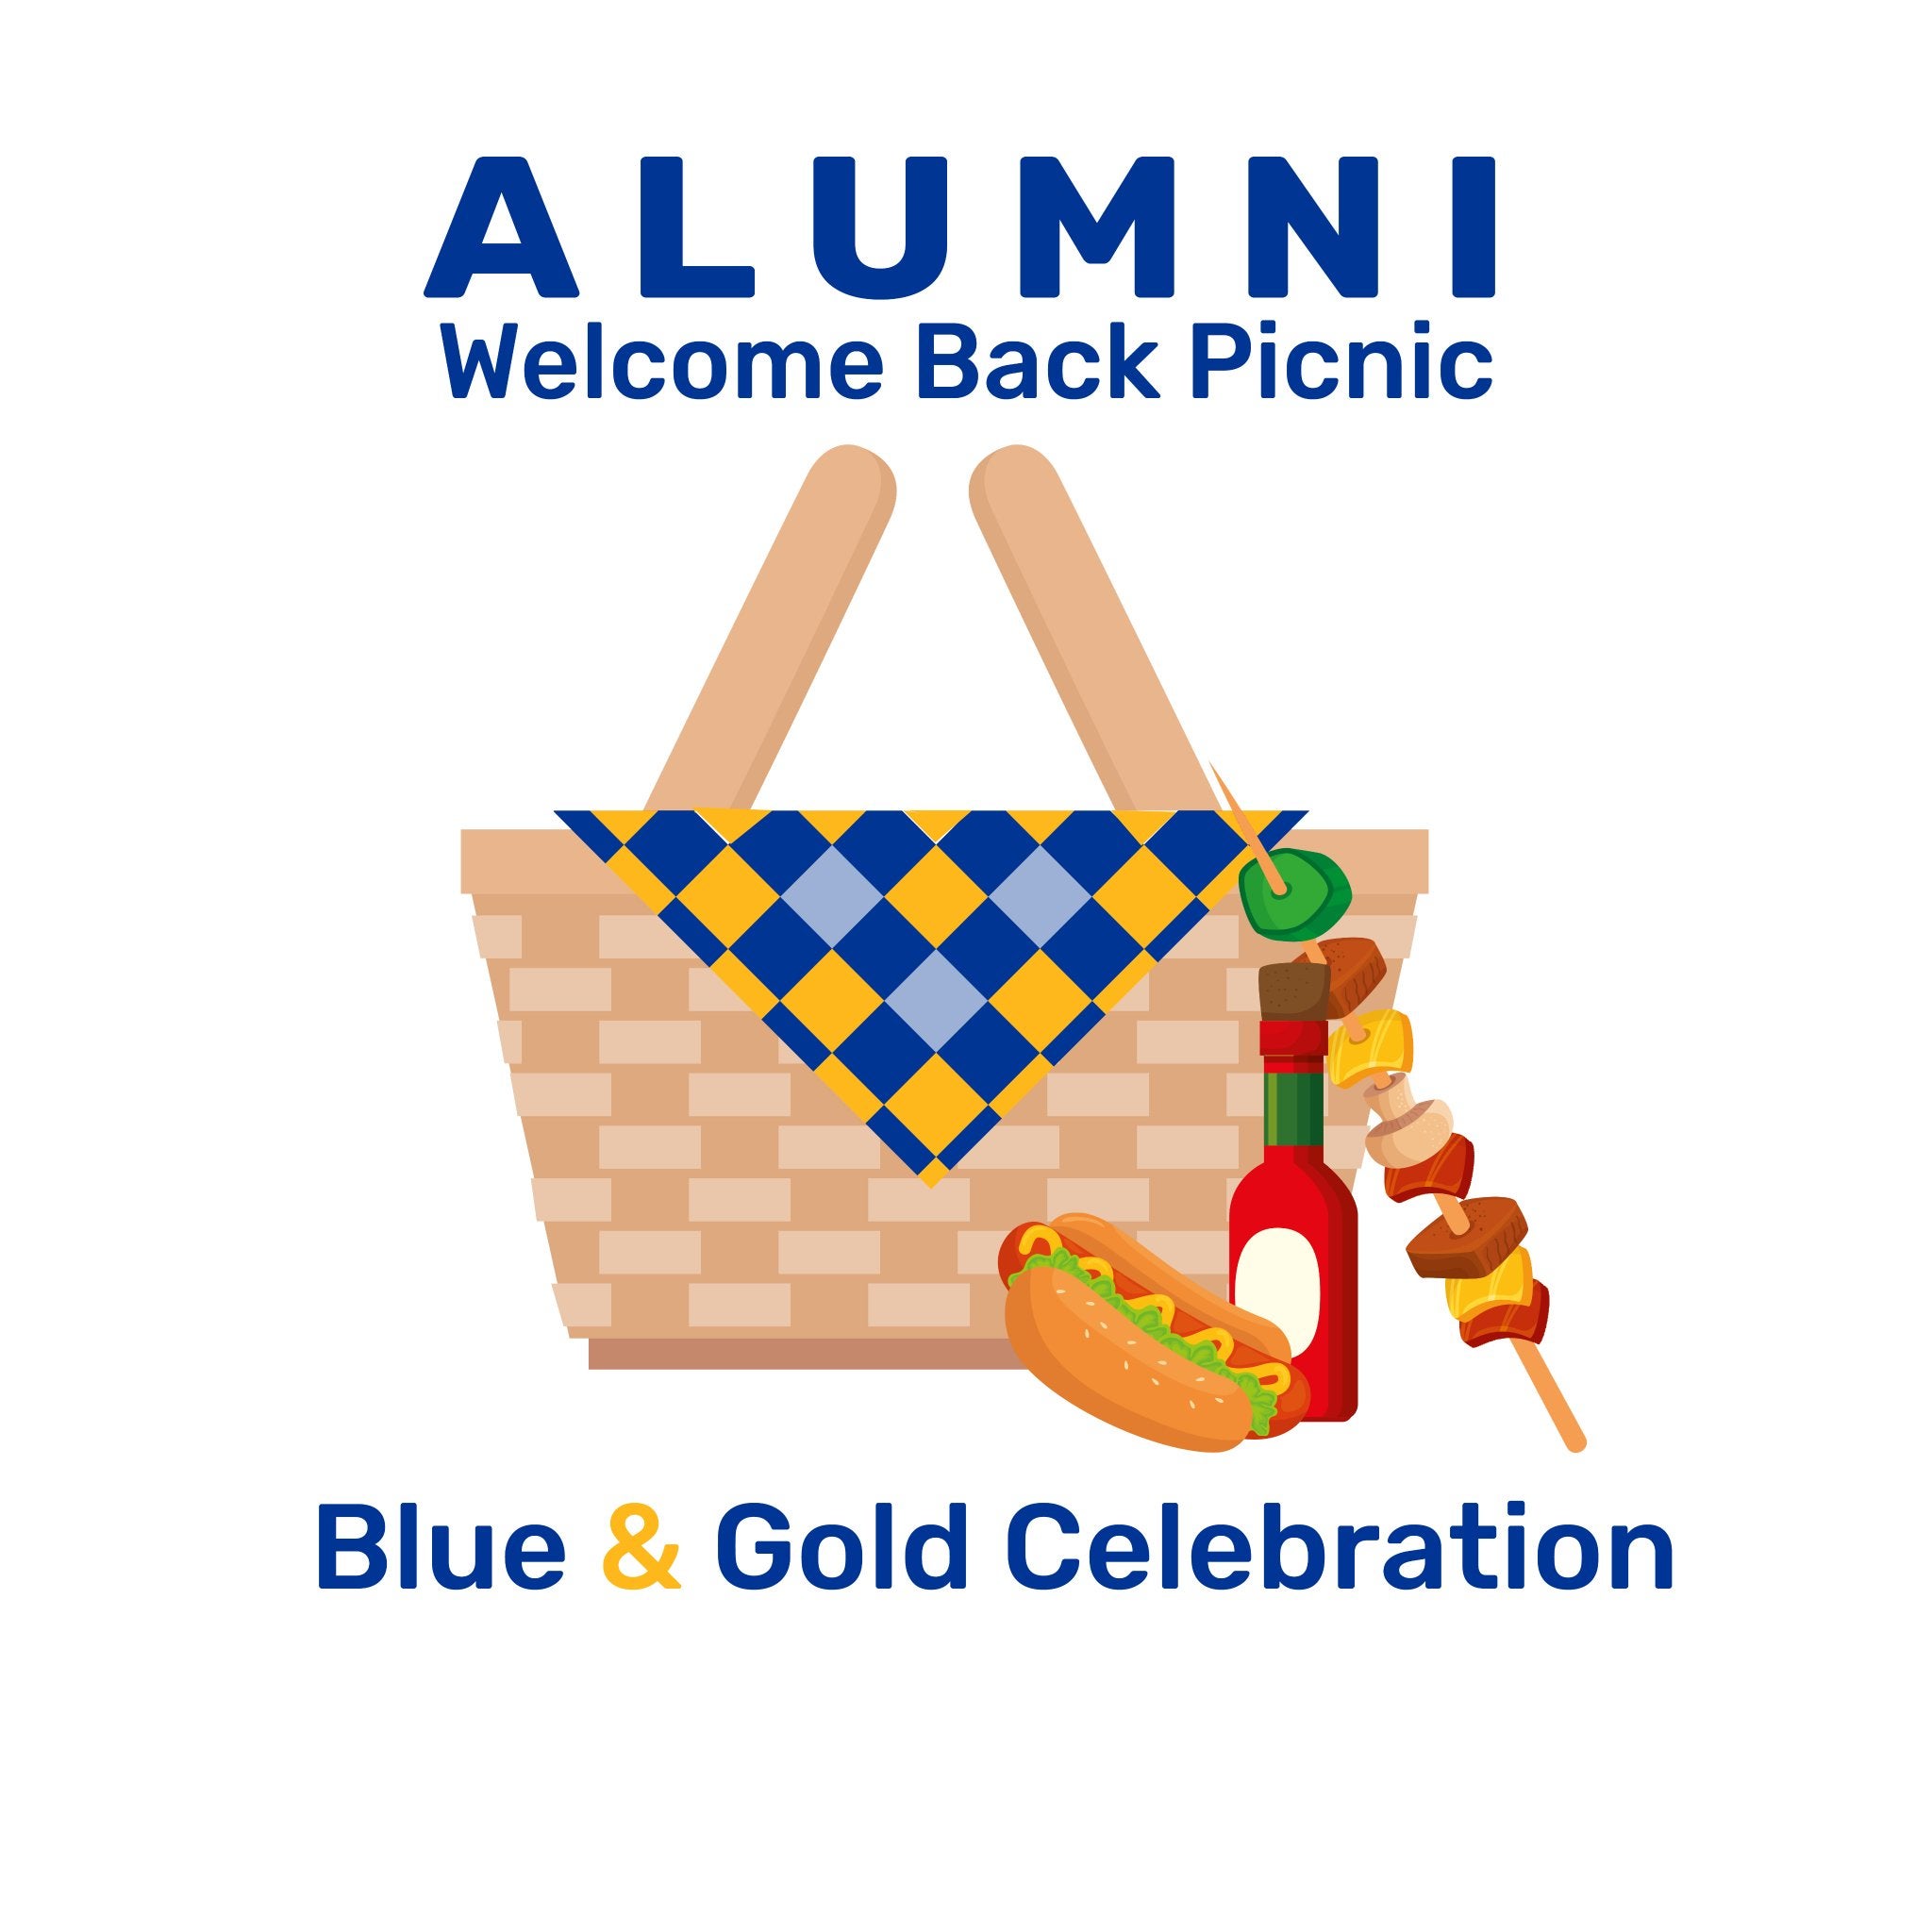 Alumni Welcome Back Picnic - Blue & Gold Celebration Logo